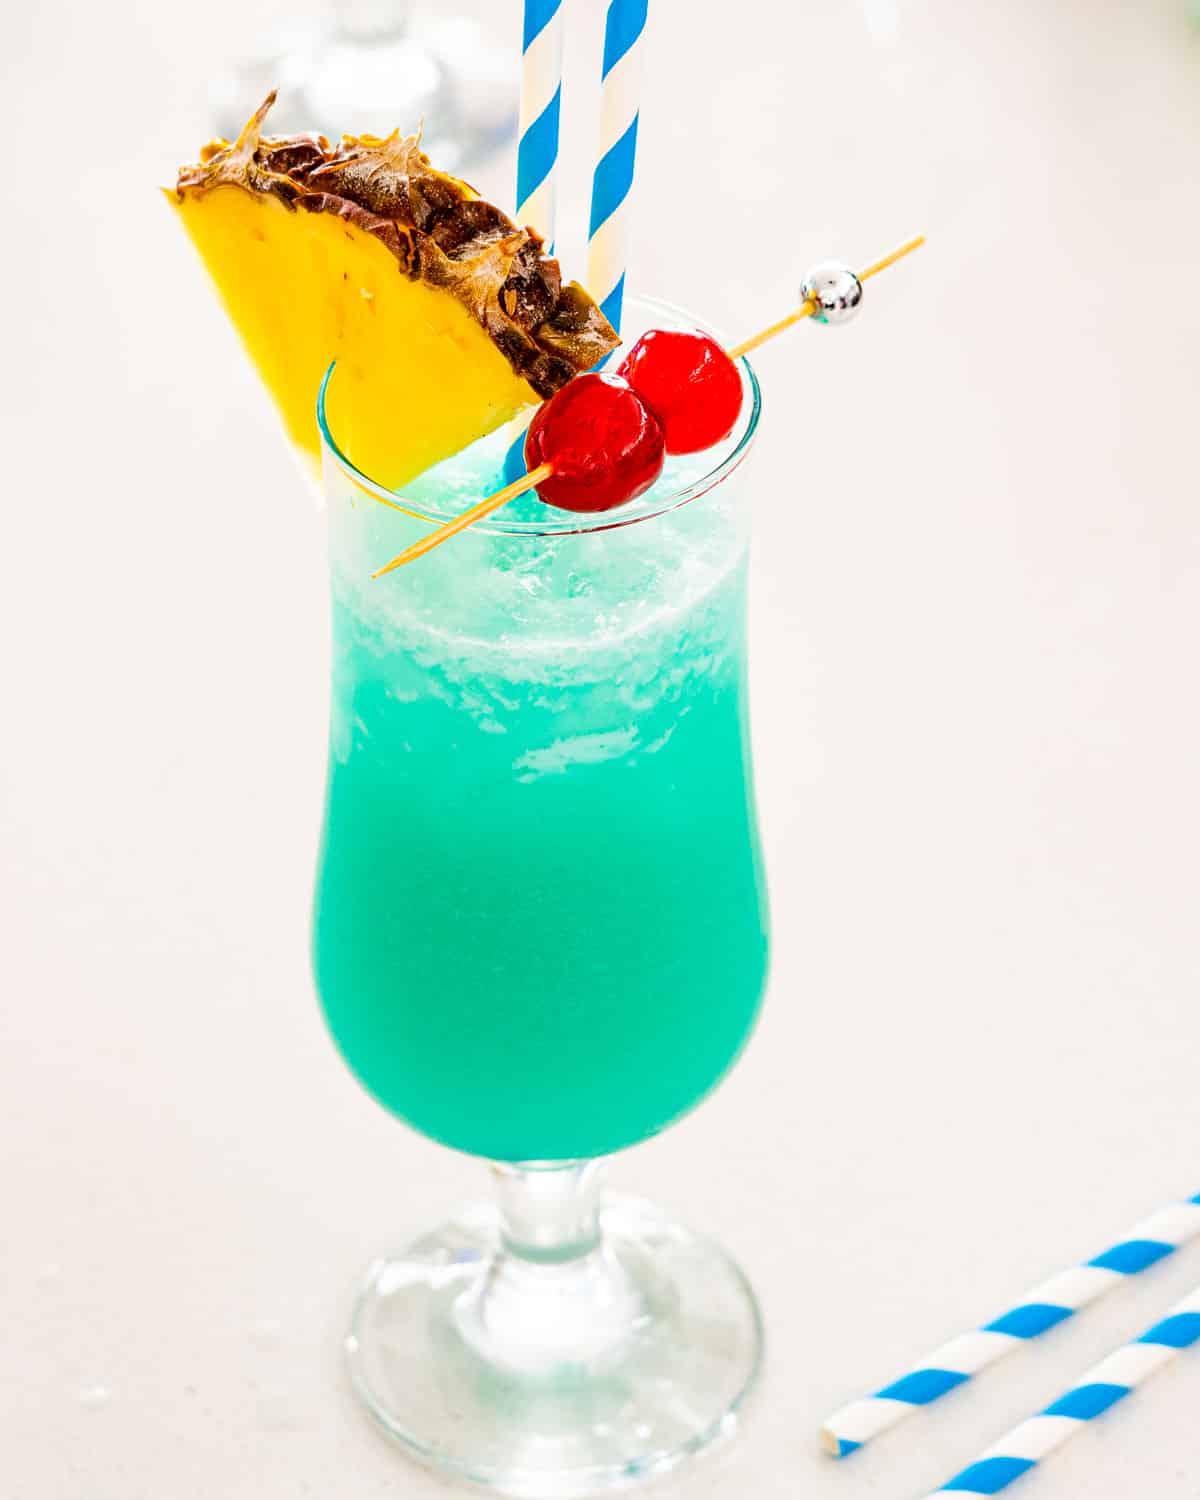 blue hawaiian in a glass garnished with pineapple and maraschino cherries.